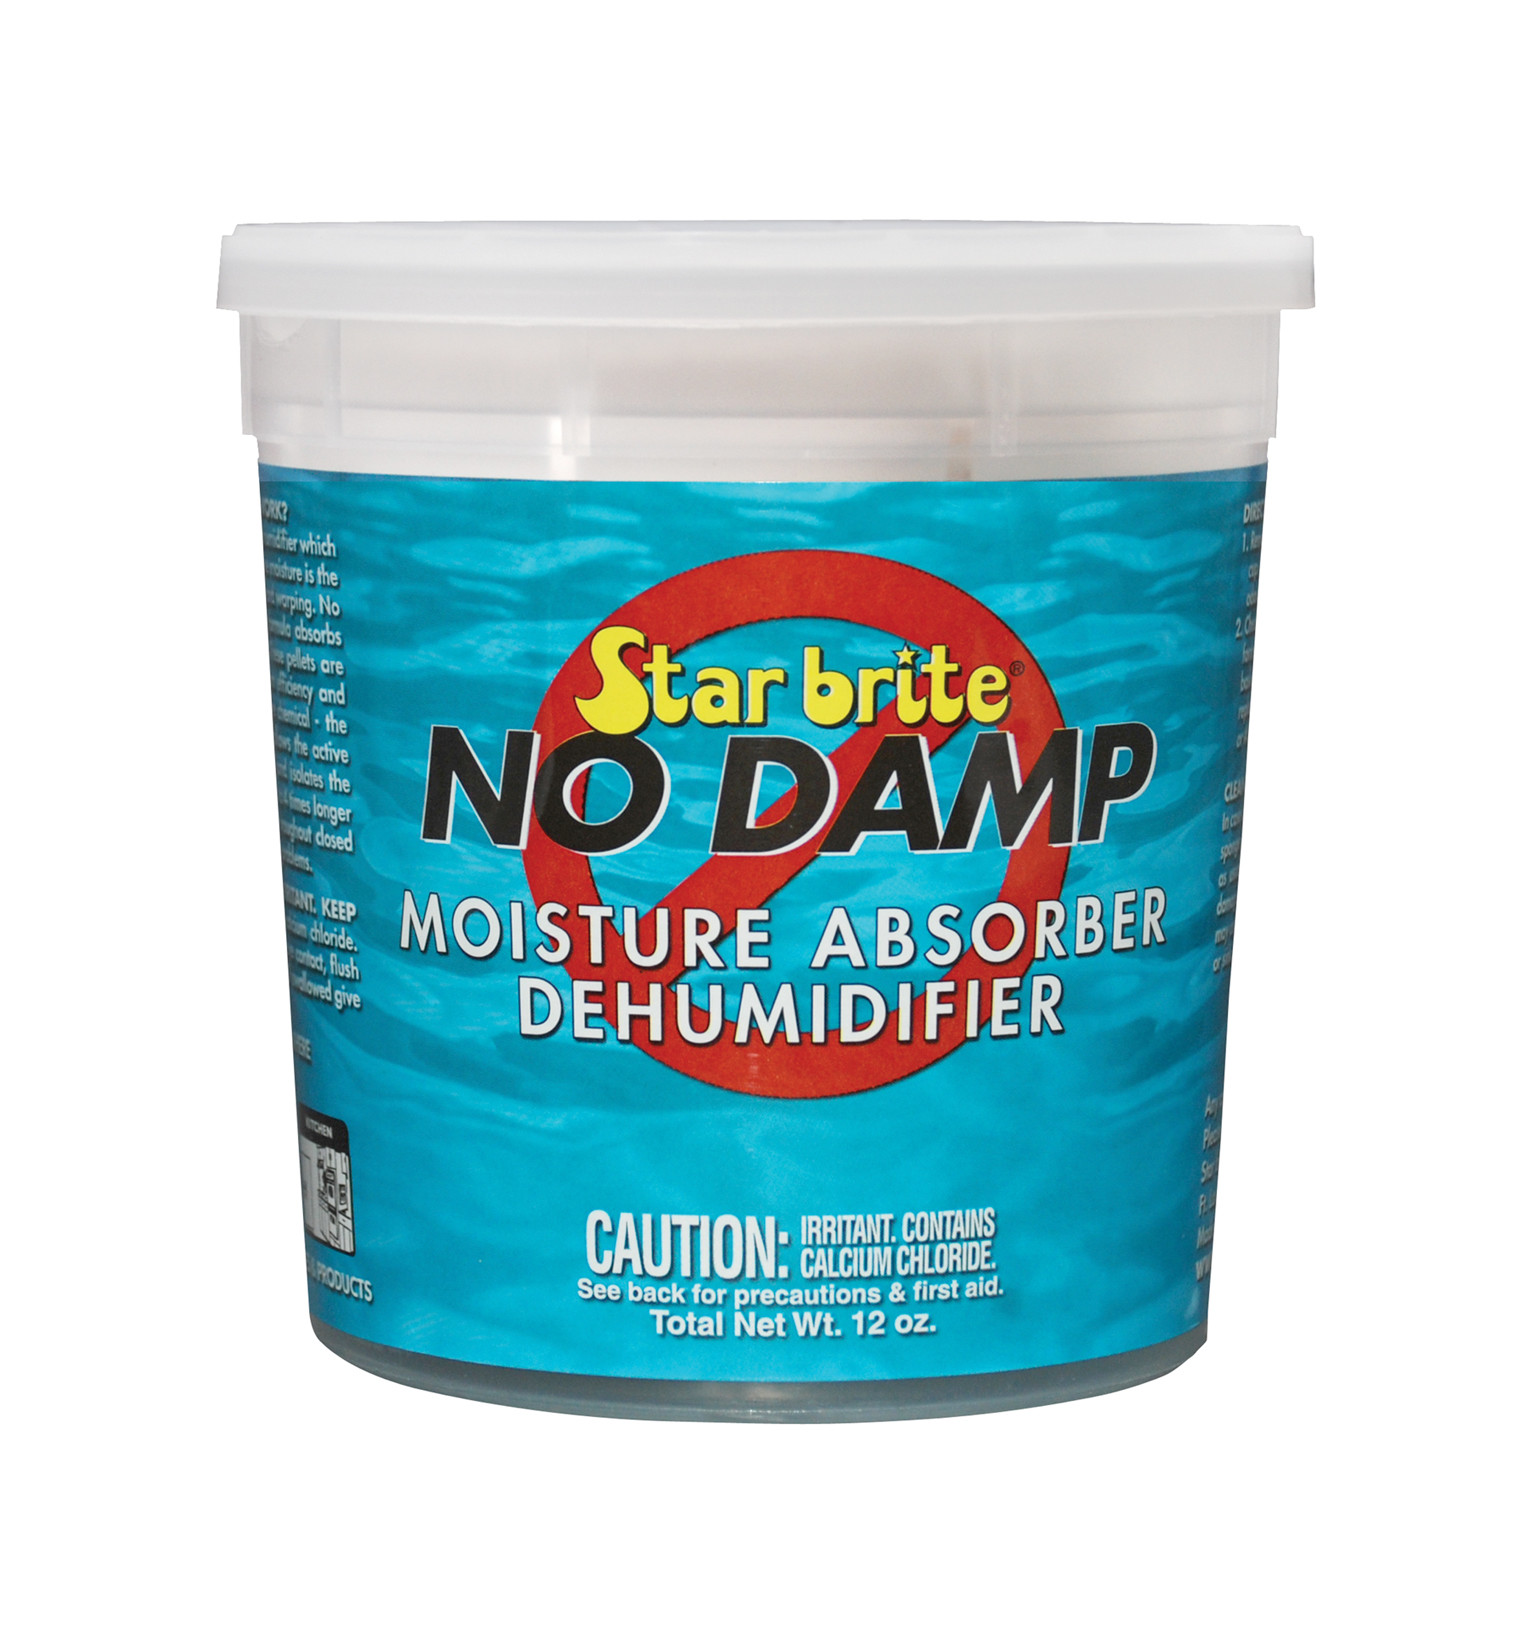 No Damp Dehumidifier 340g